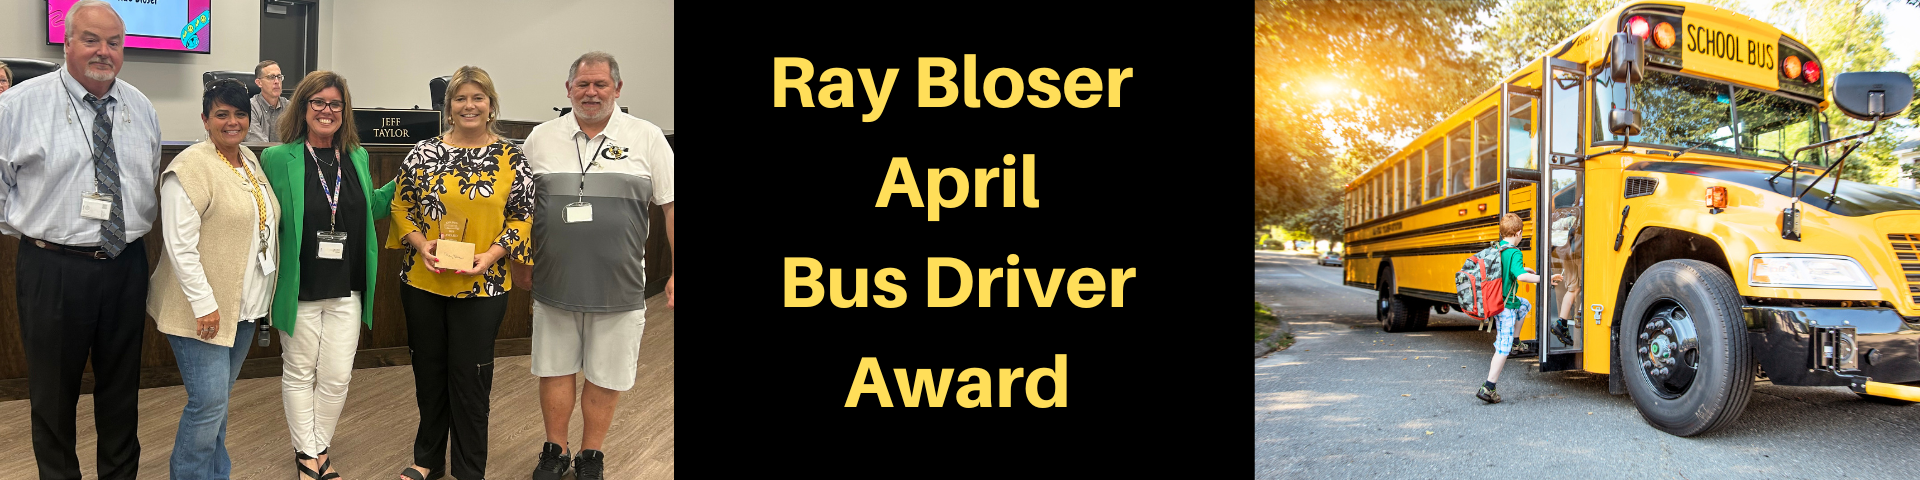 Ray Bloser